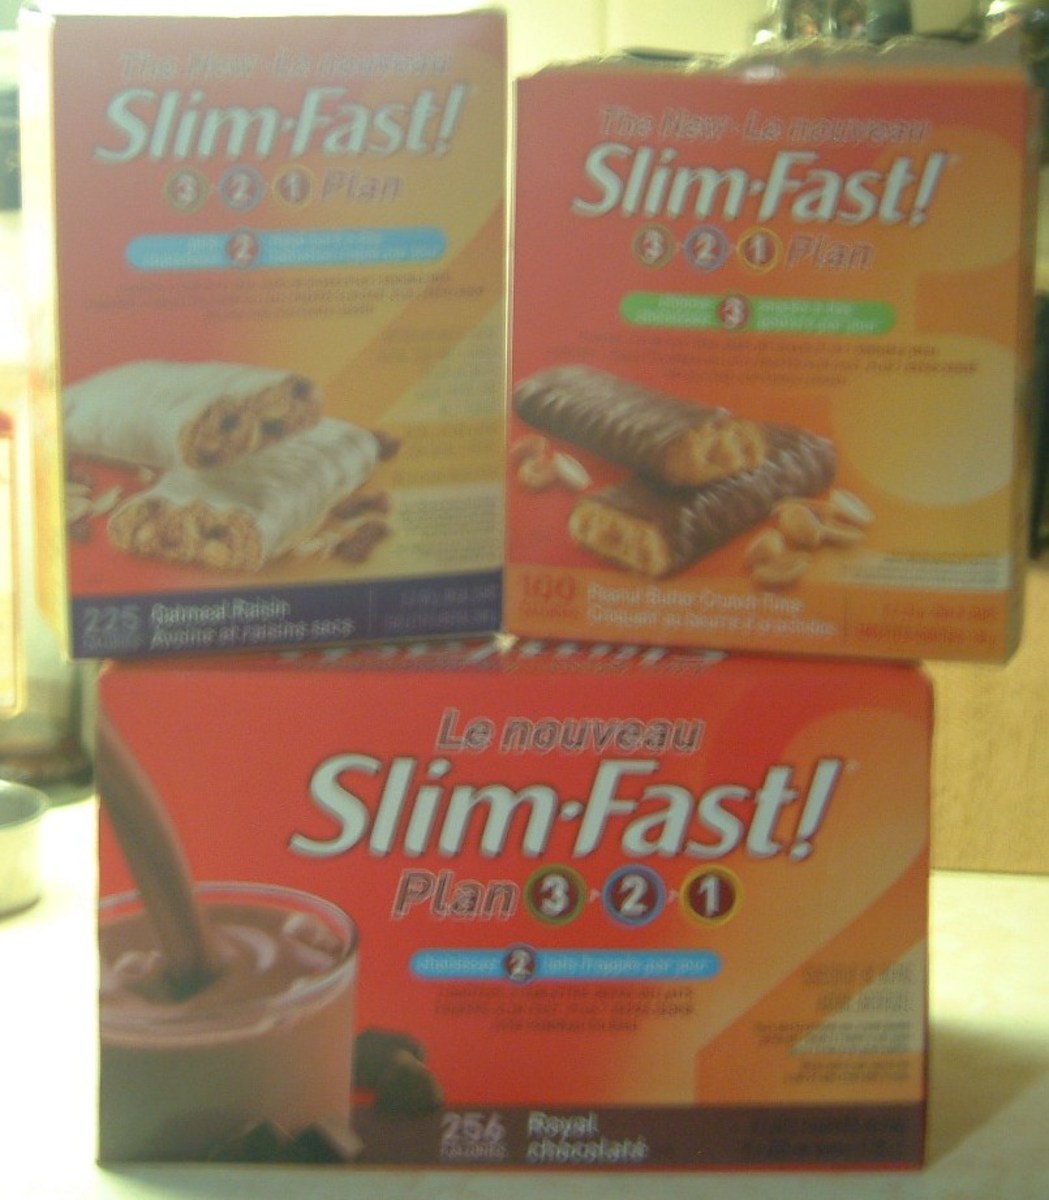 My favorite Slim Fast Diet Products